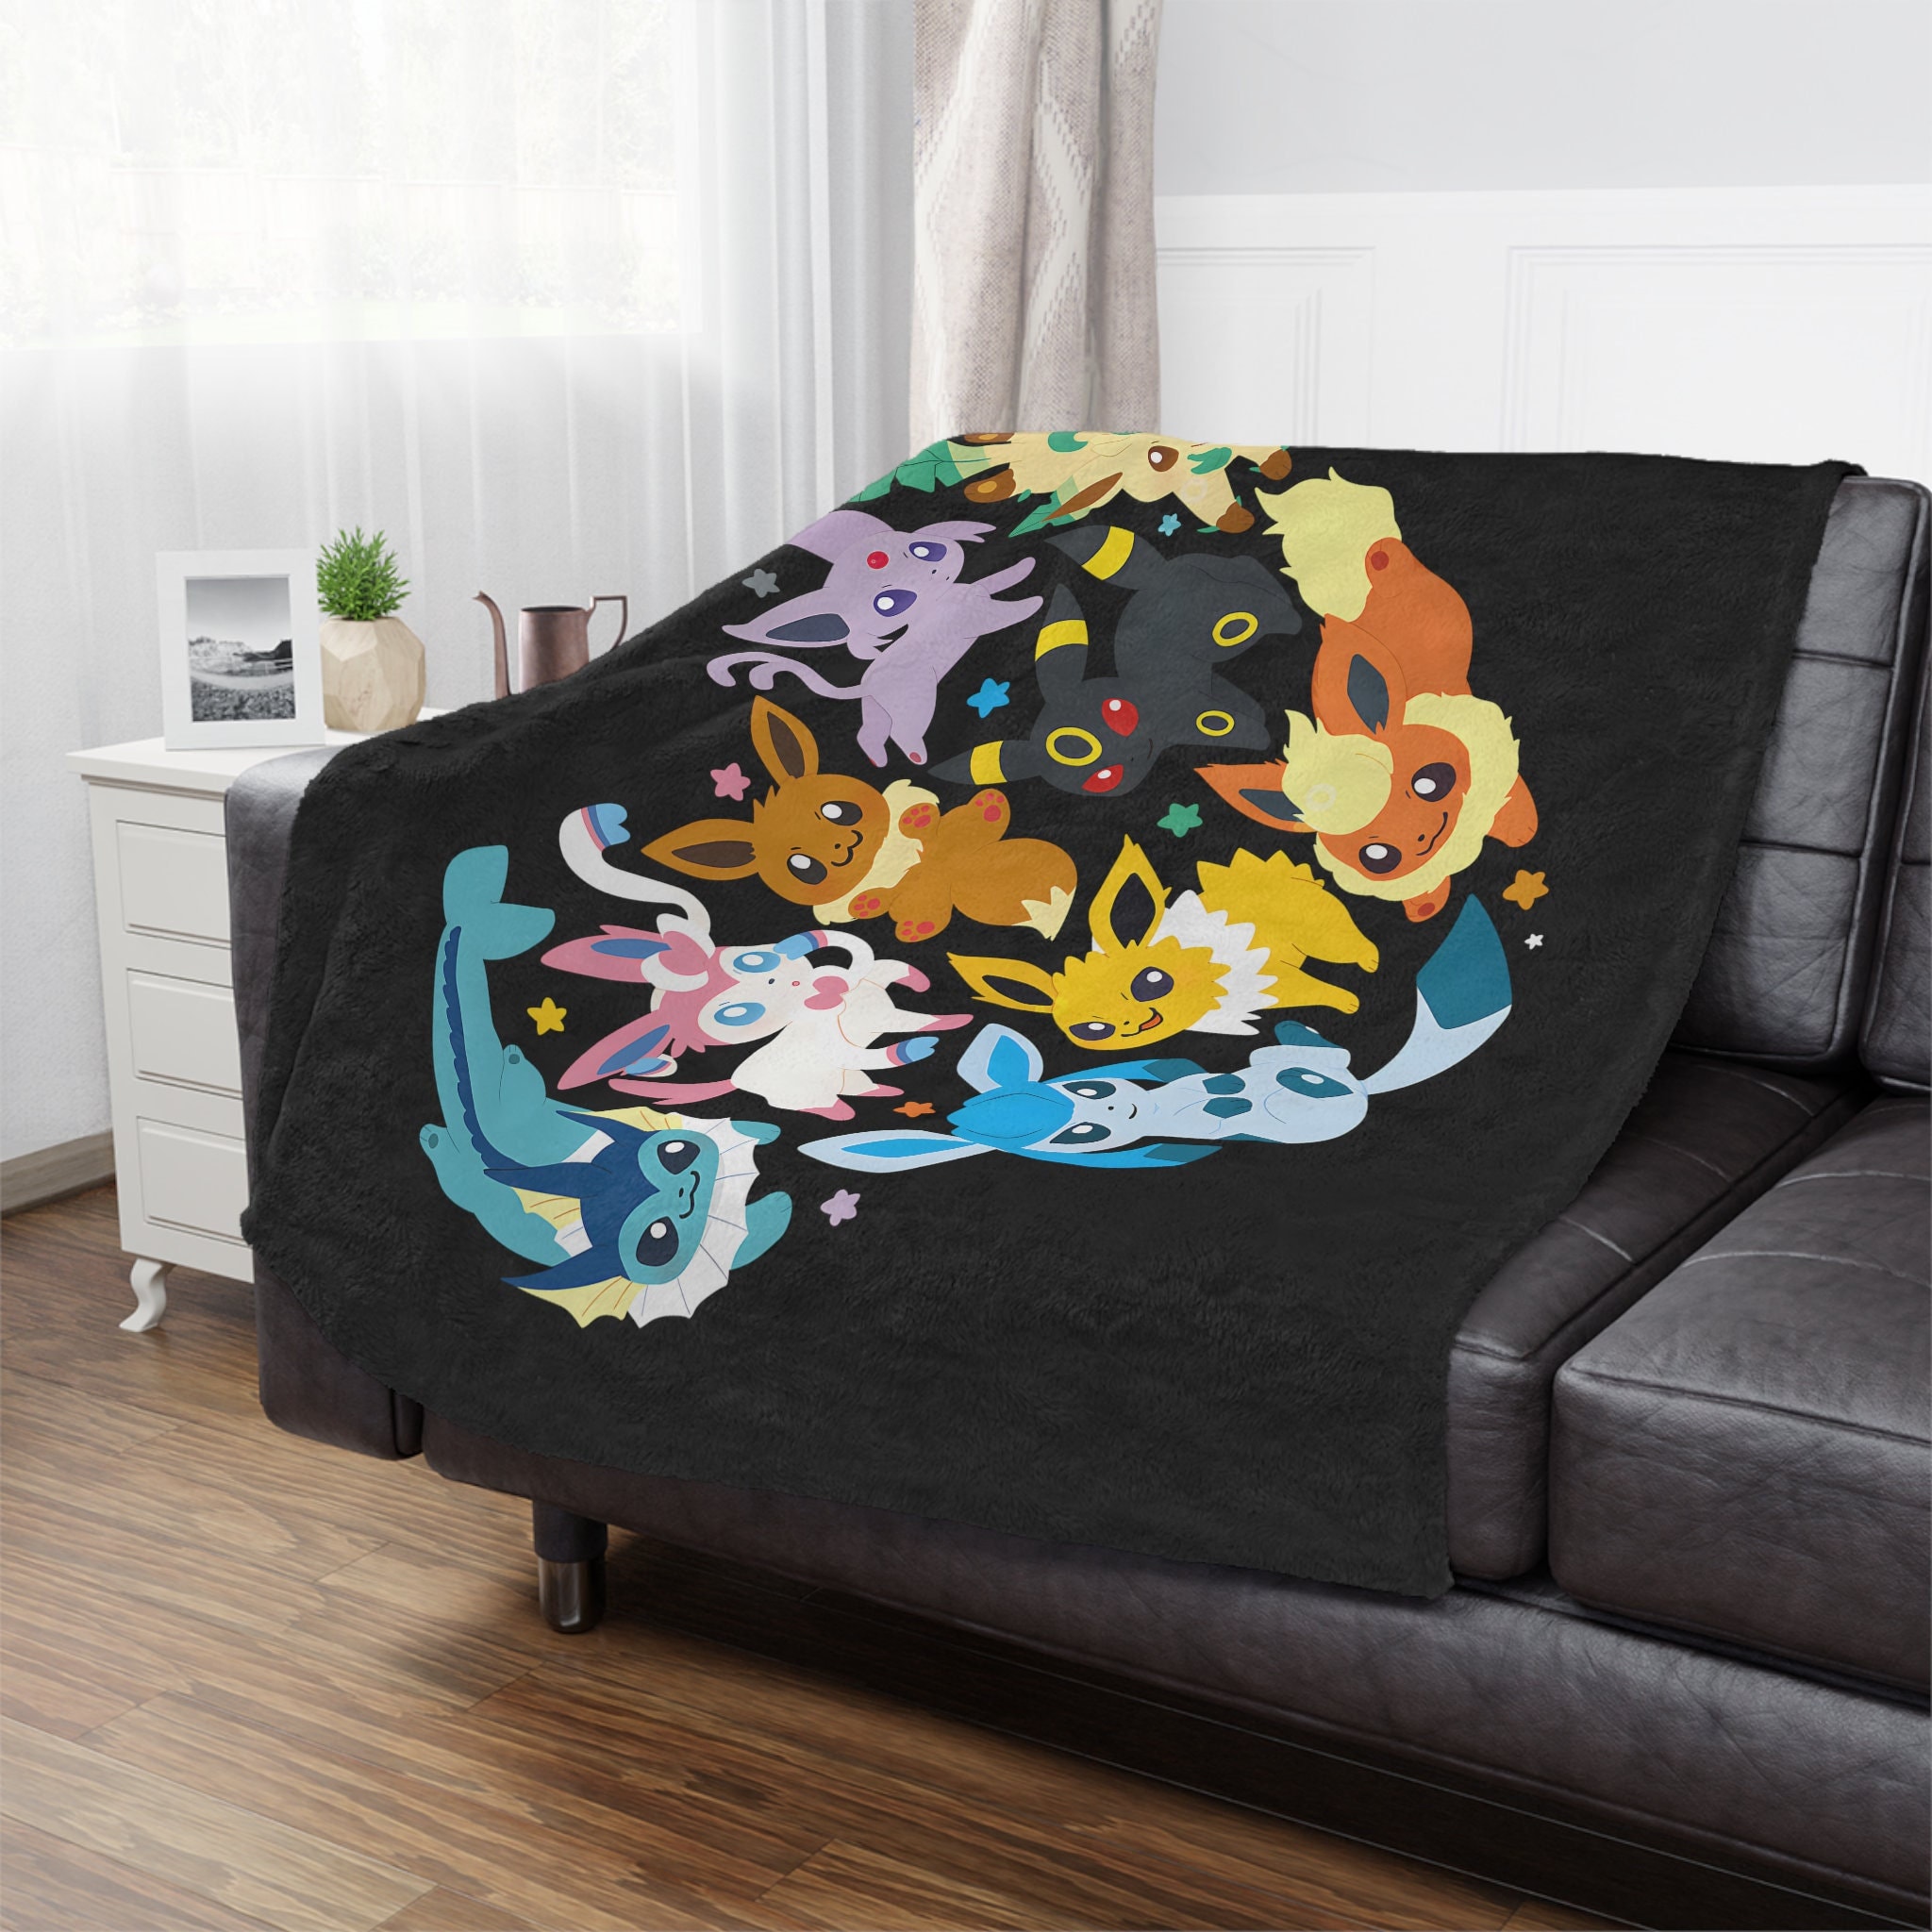 Buy Spy x Family Blanket Body Pillow | Sephni Anime Store-demhanvico.com.vn